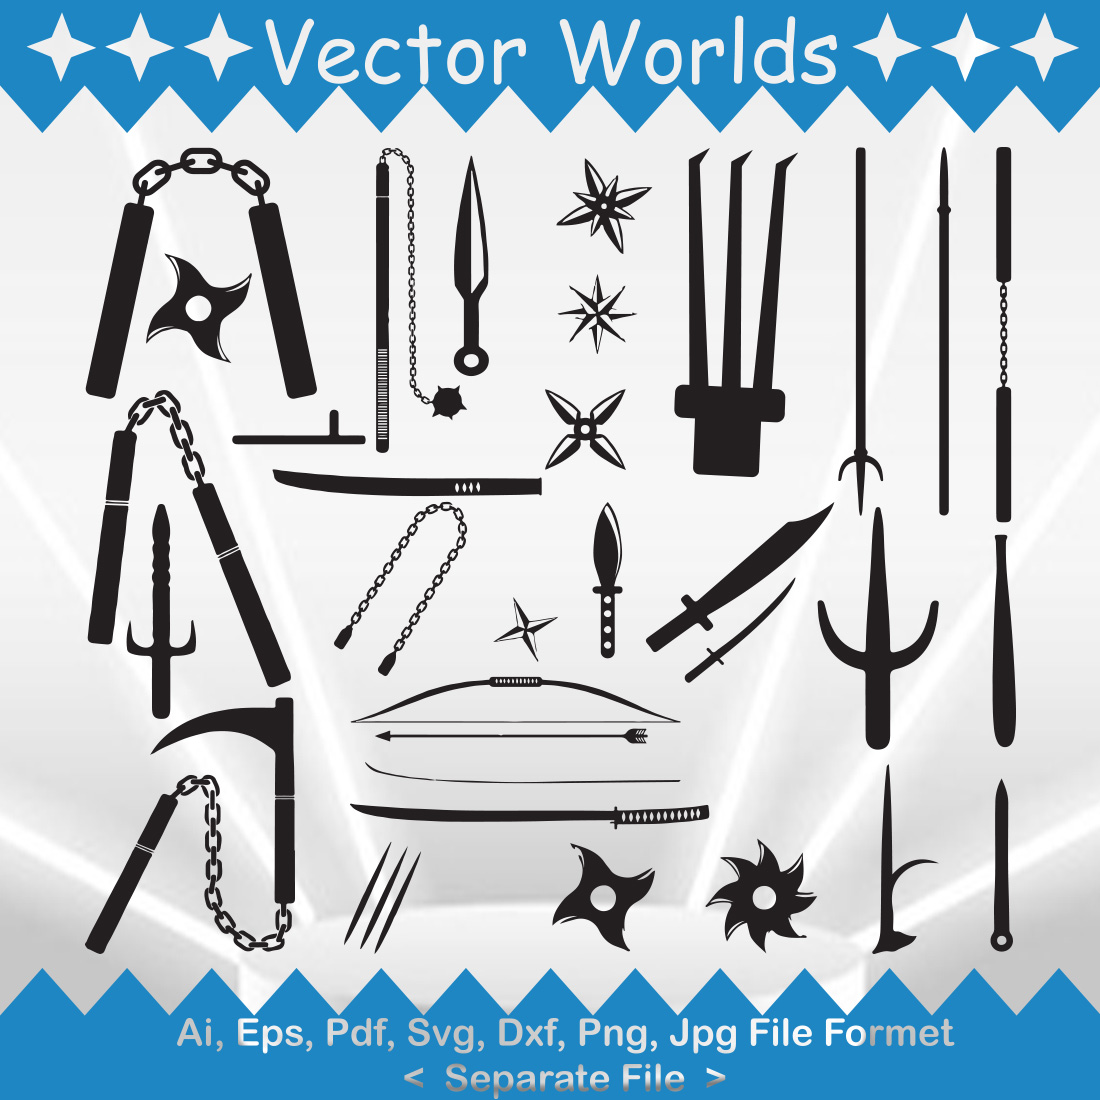 Nunchaku SVG Vector Design cover image.